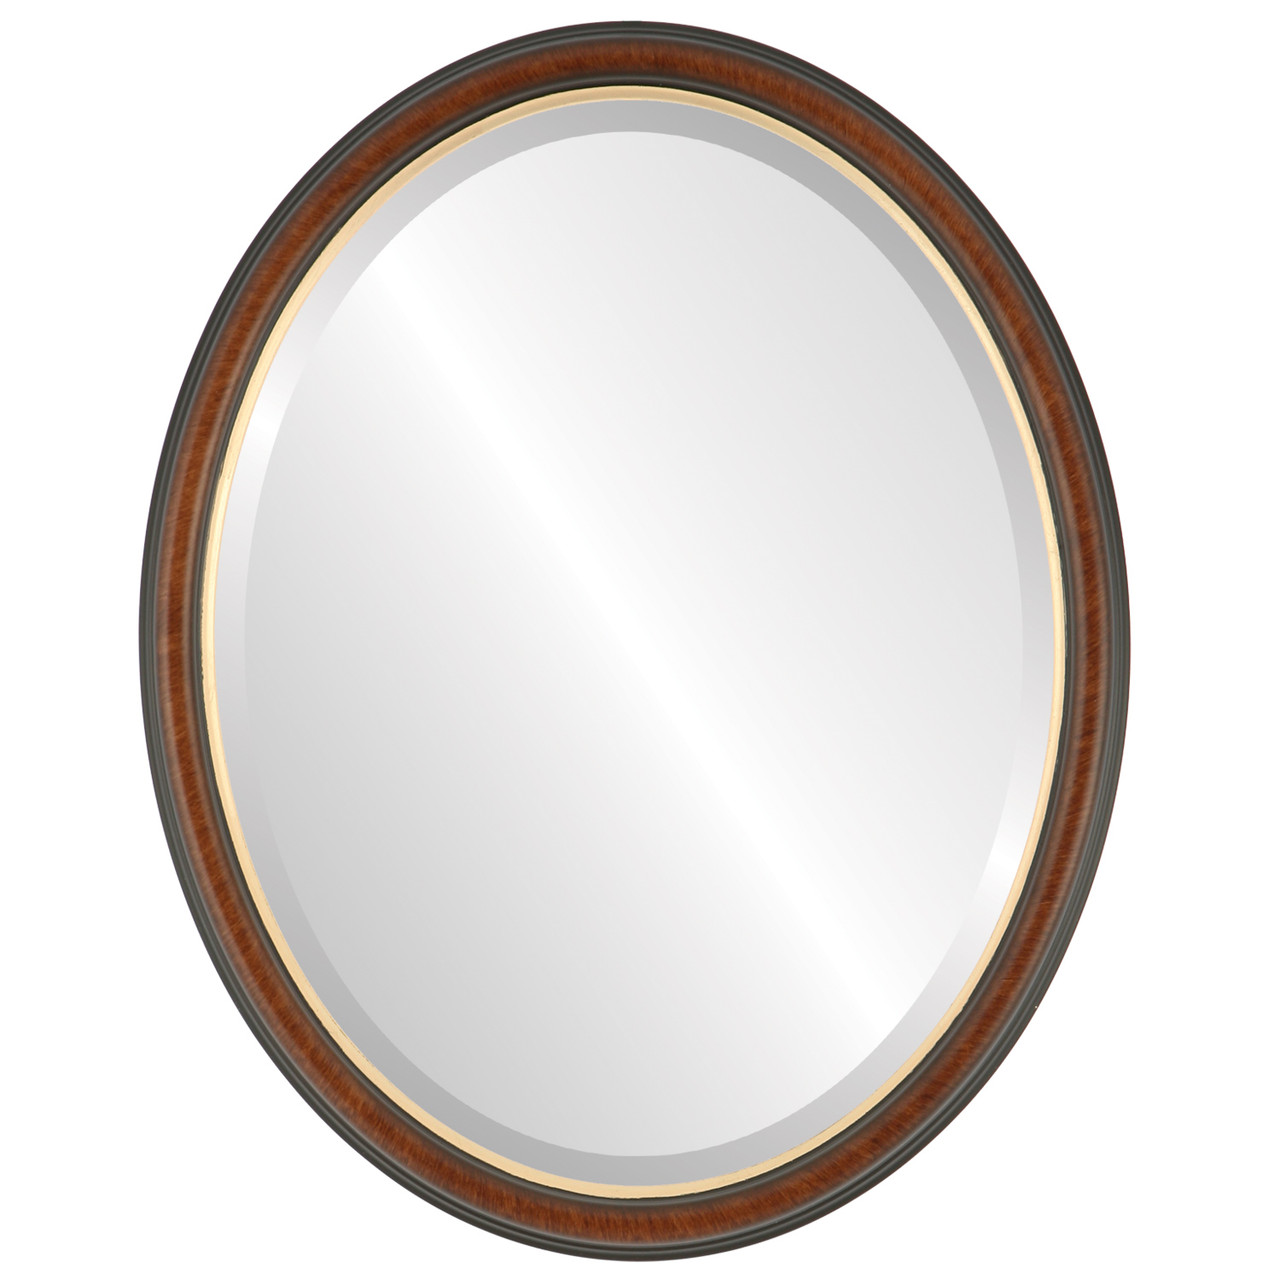 Hamilton Oval framed mirror Vintage Walnut with Gold Lip